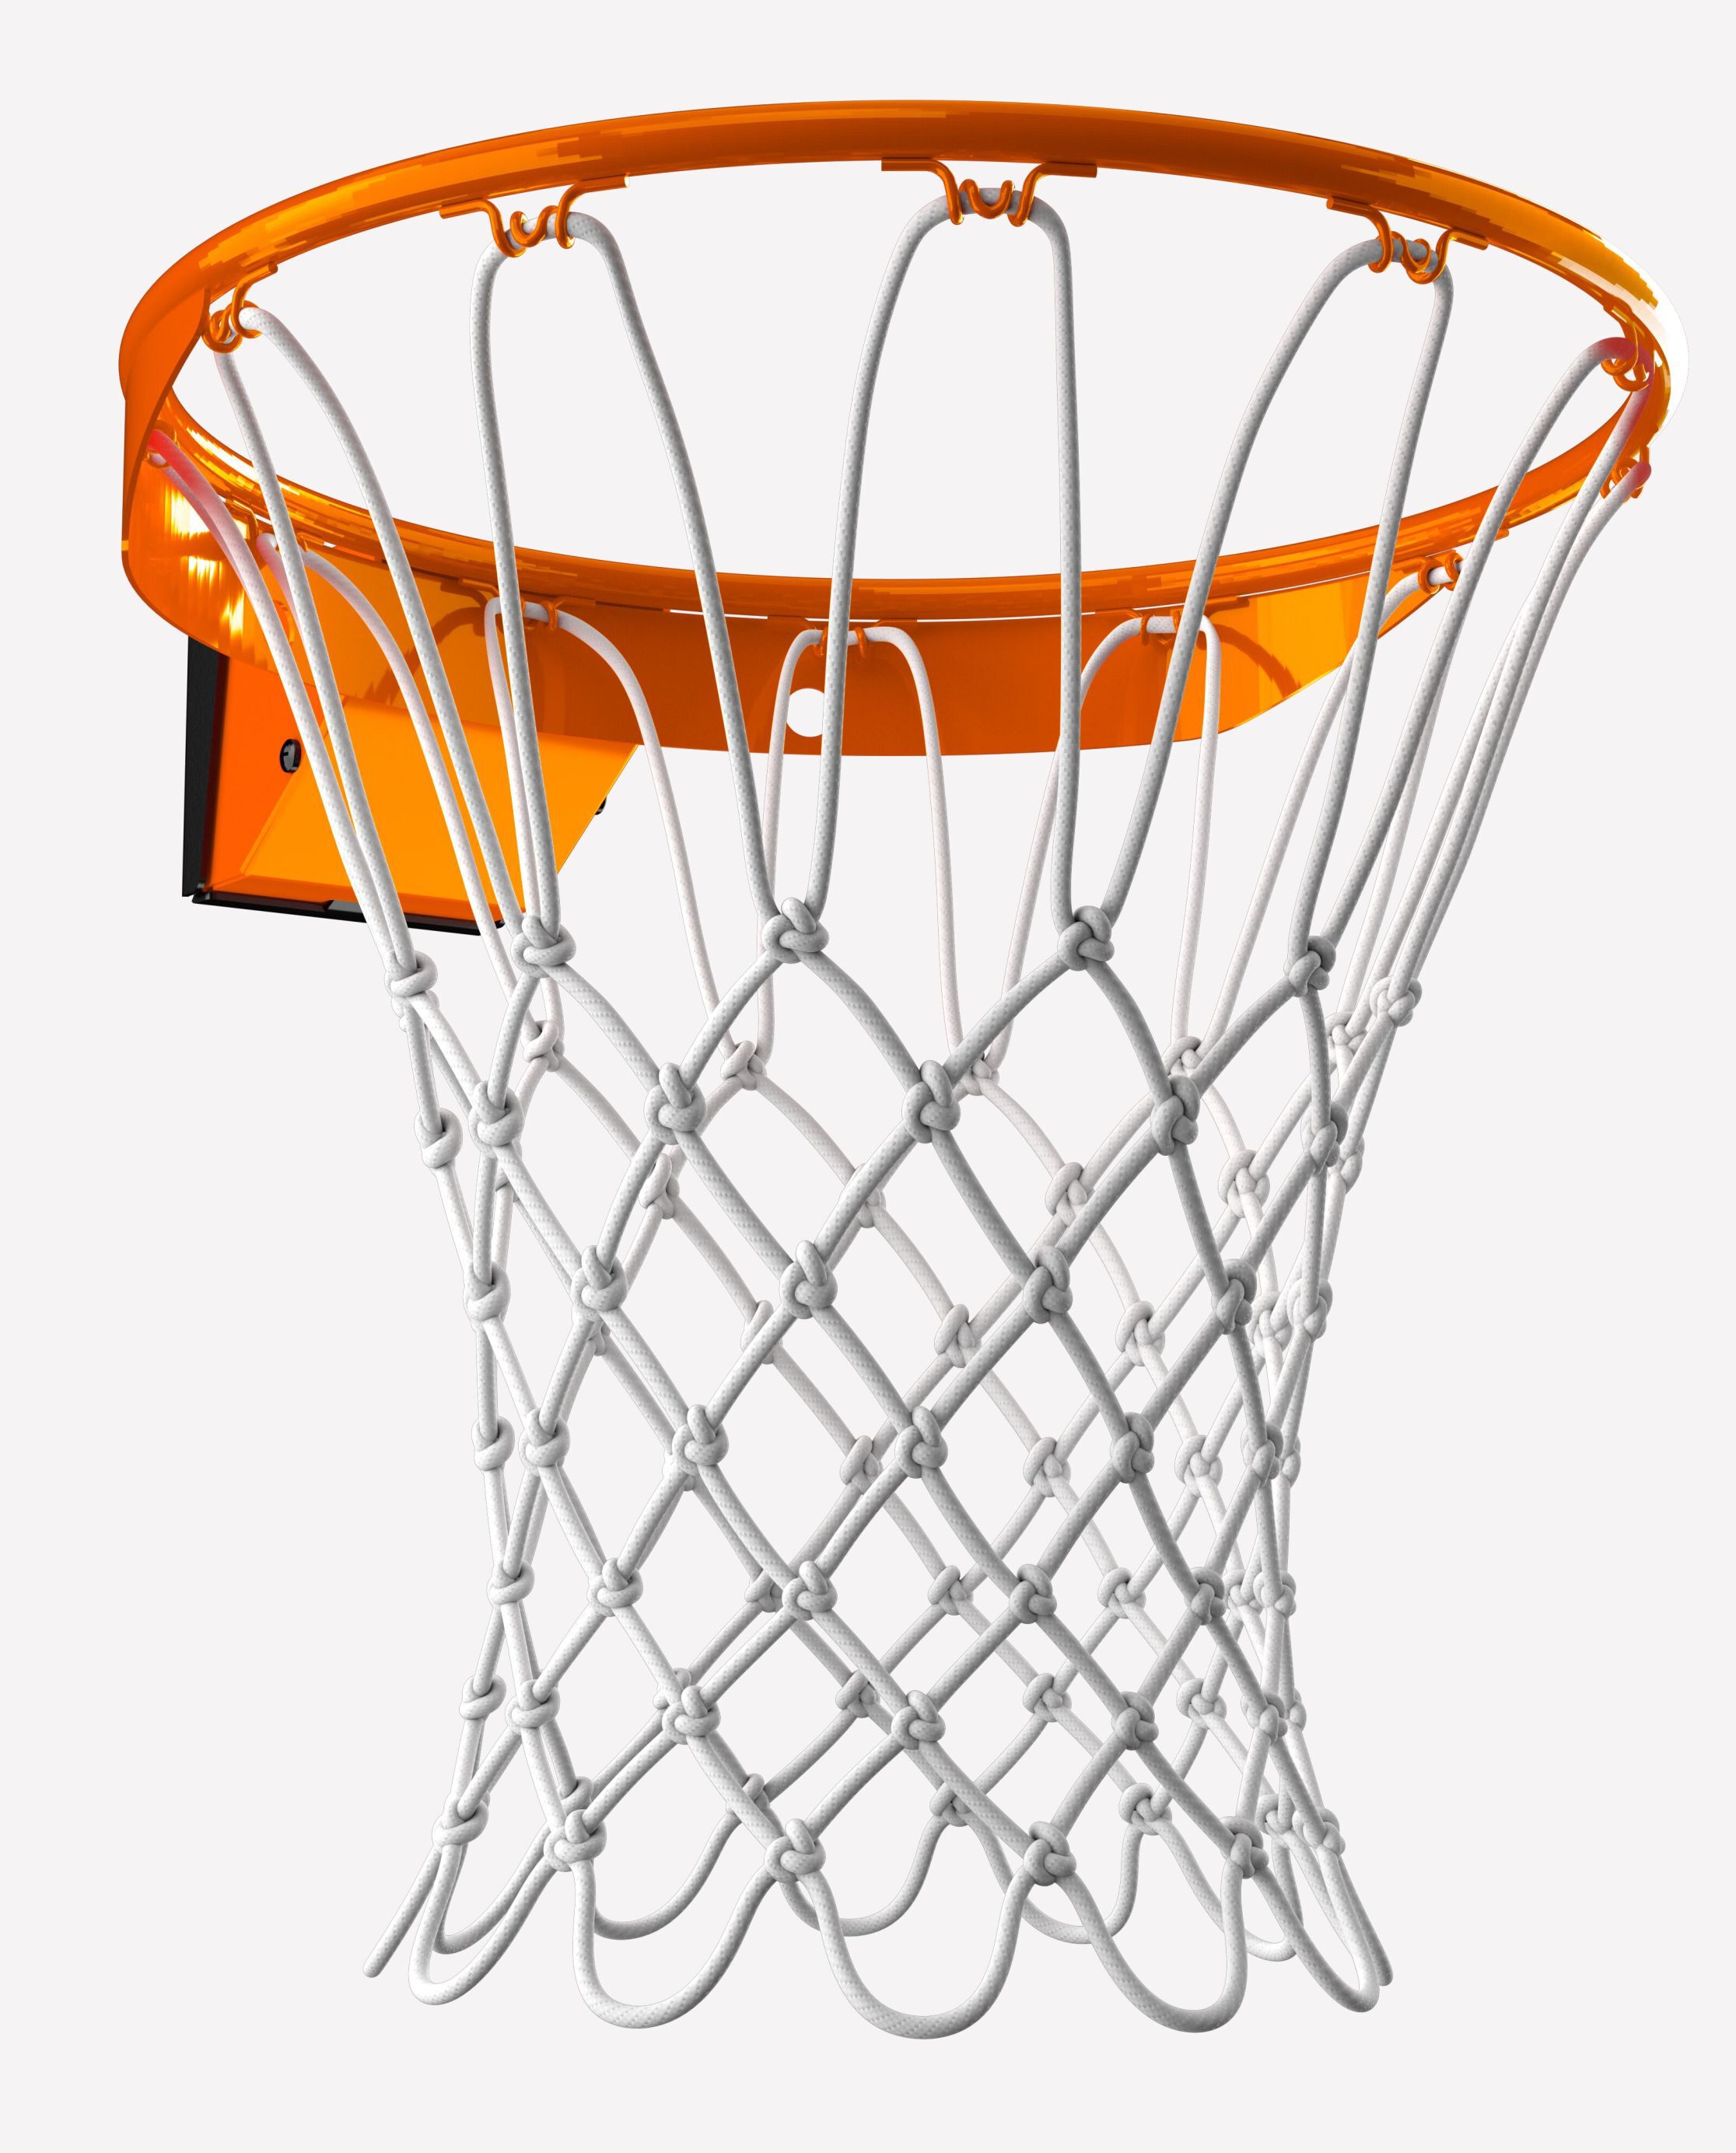 Breakaway Mounted Slam Jam Basketball Hoop Rim and Net Dunk Shooting Sports Game 